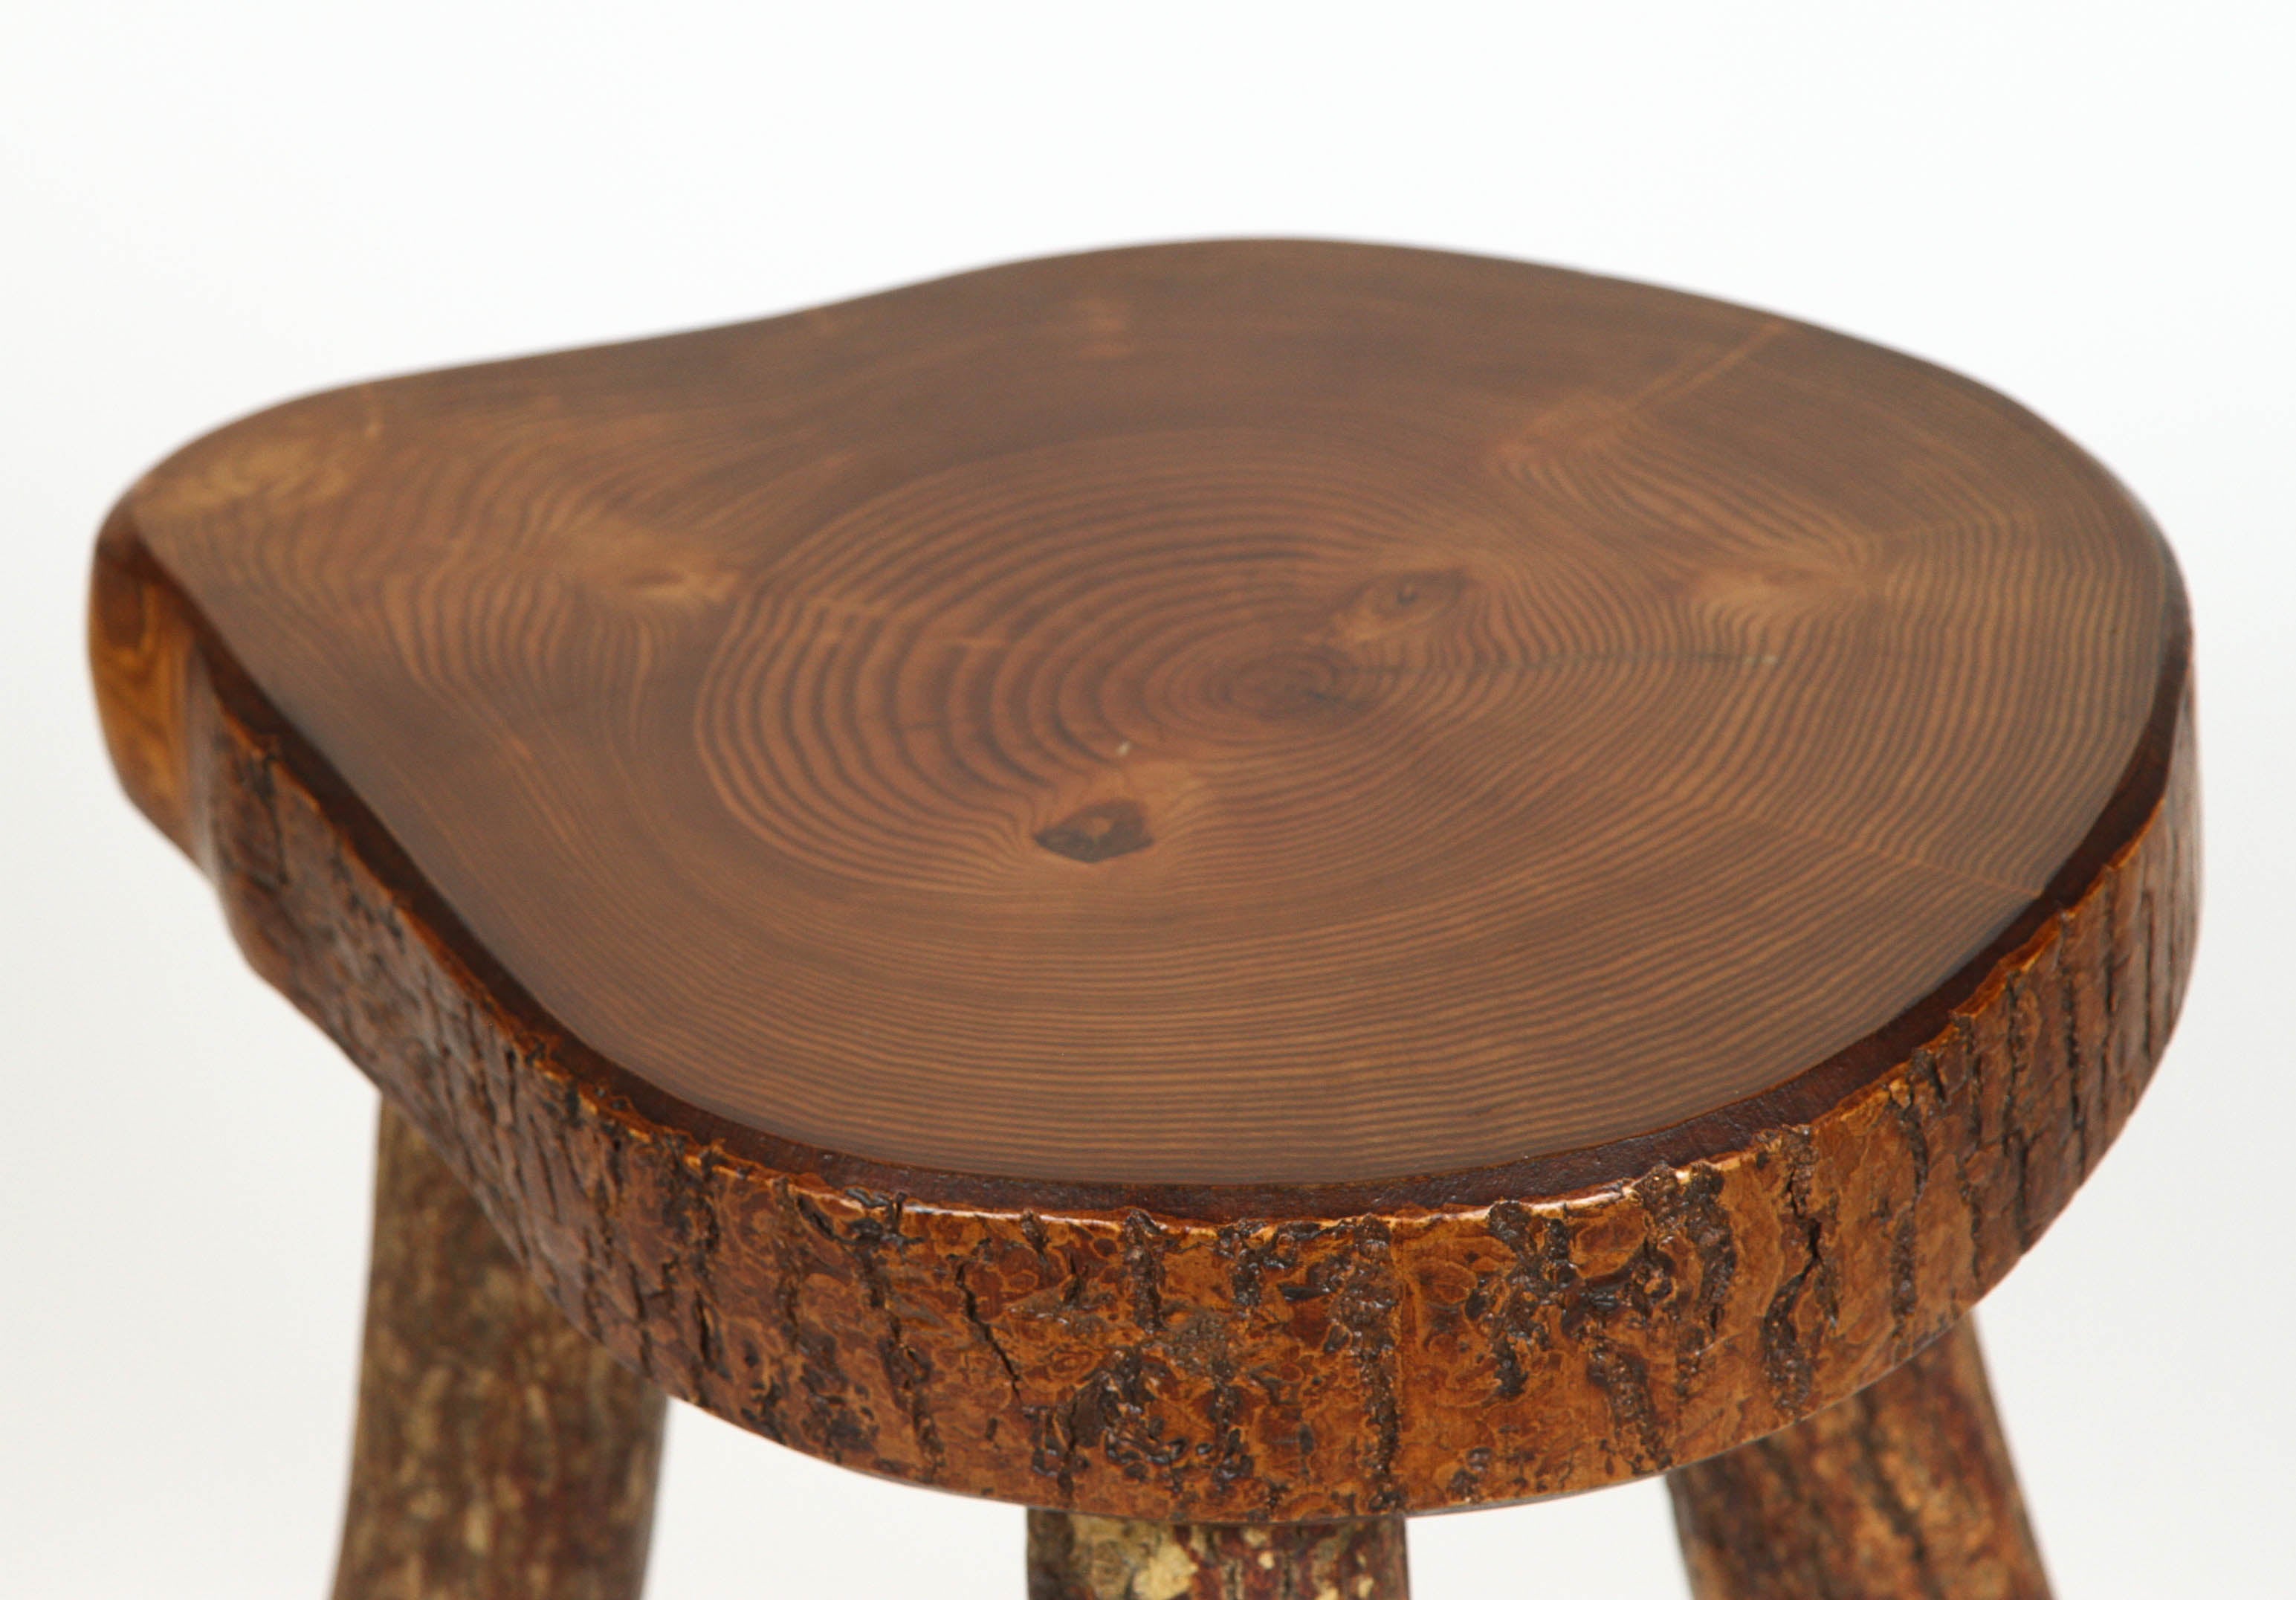 Organically shaped wood side table. Vintage item.